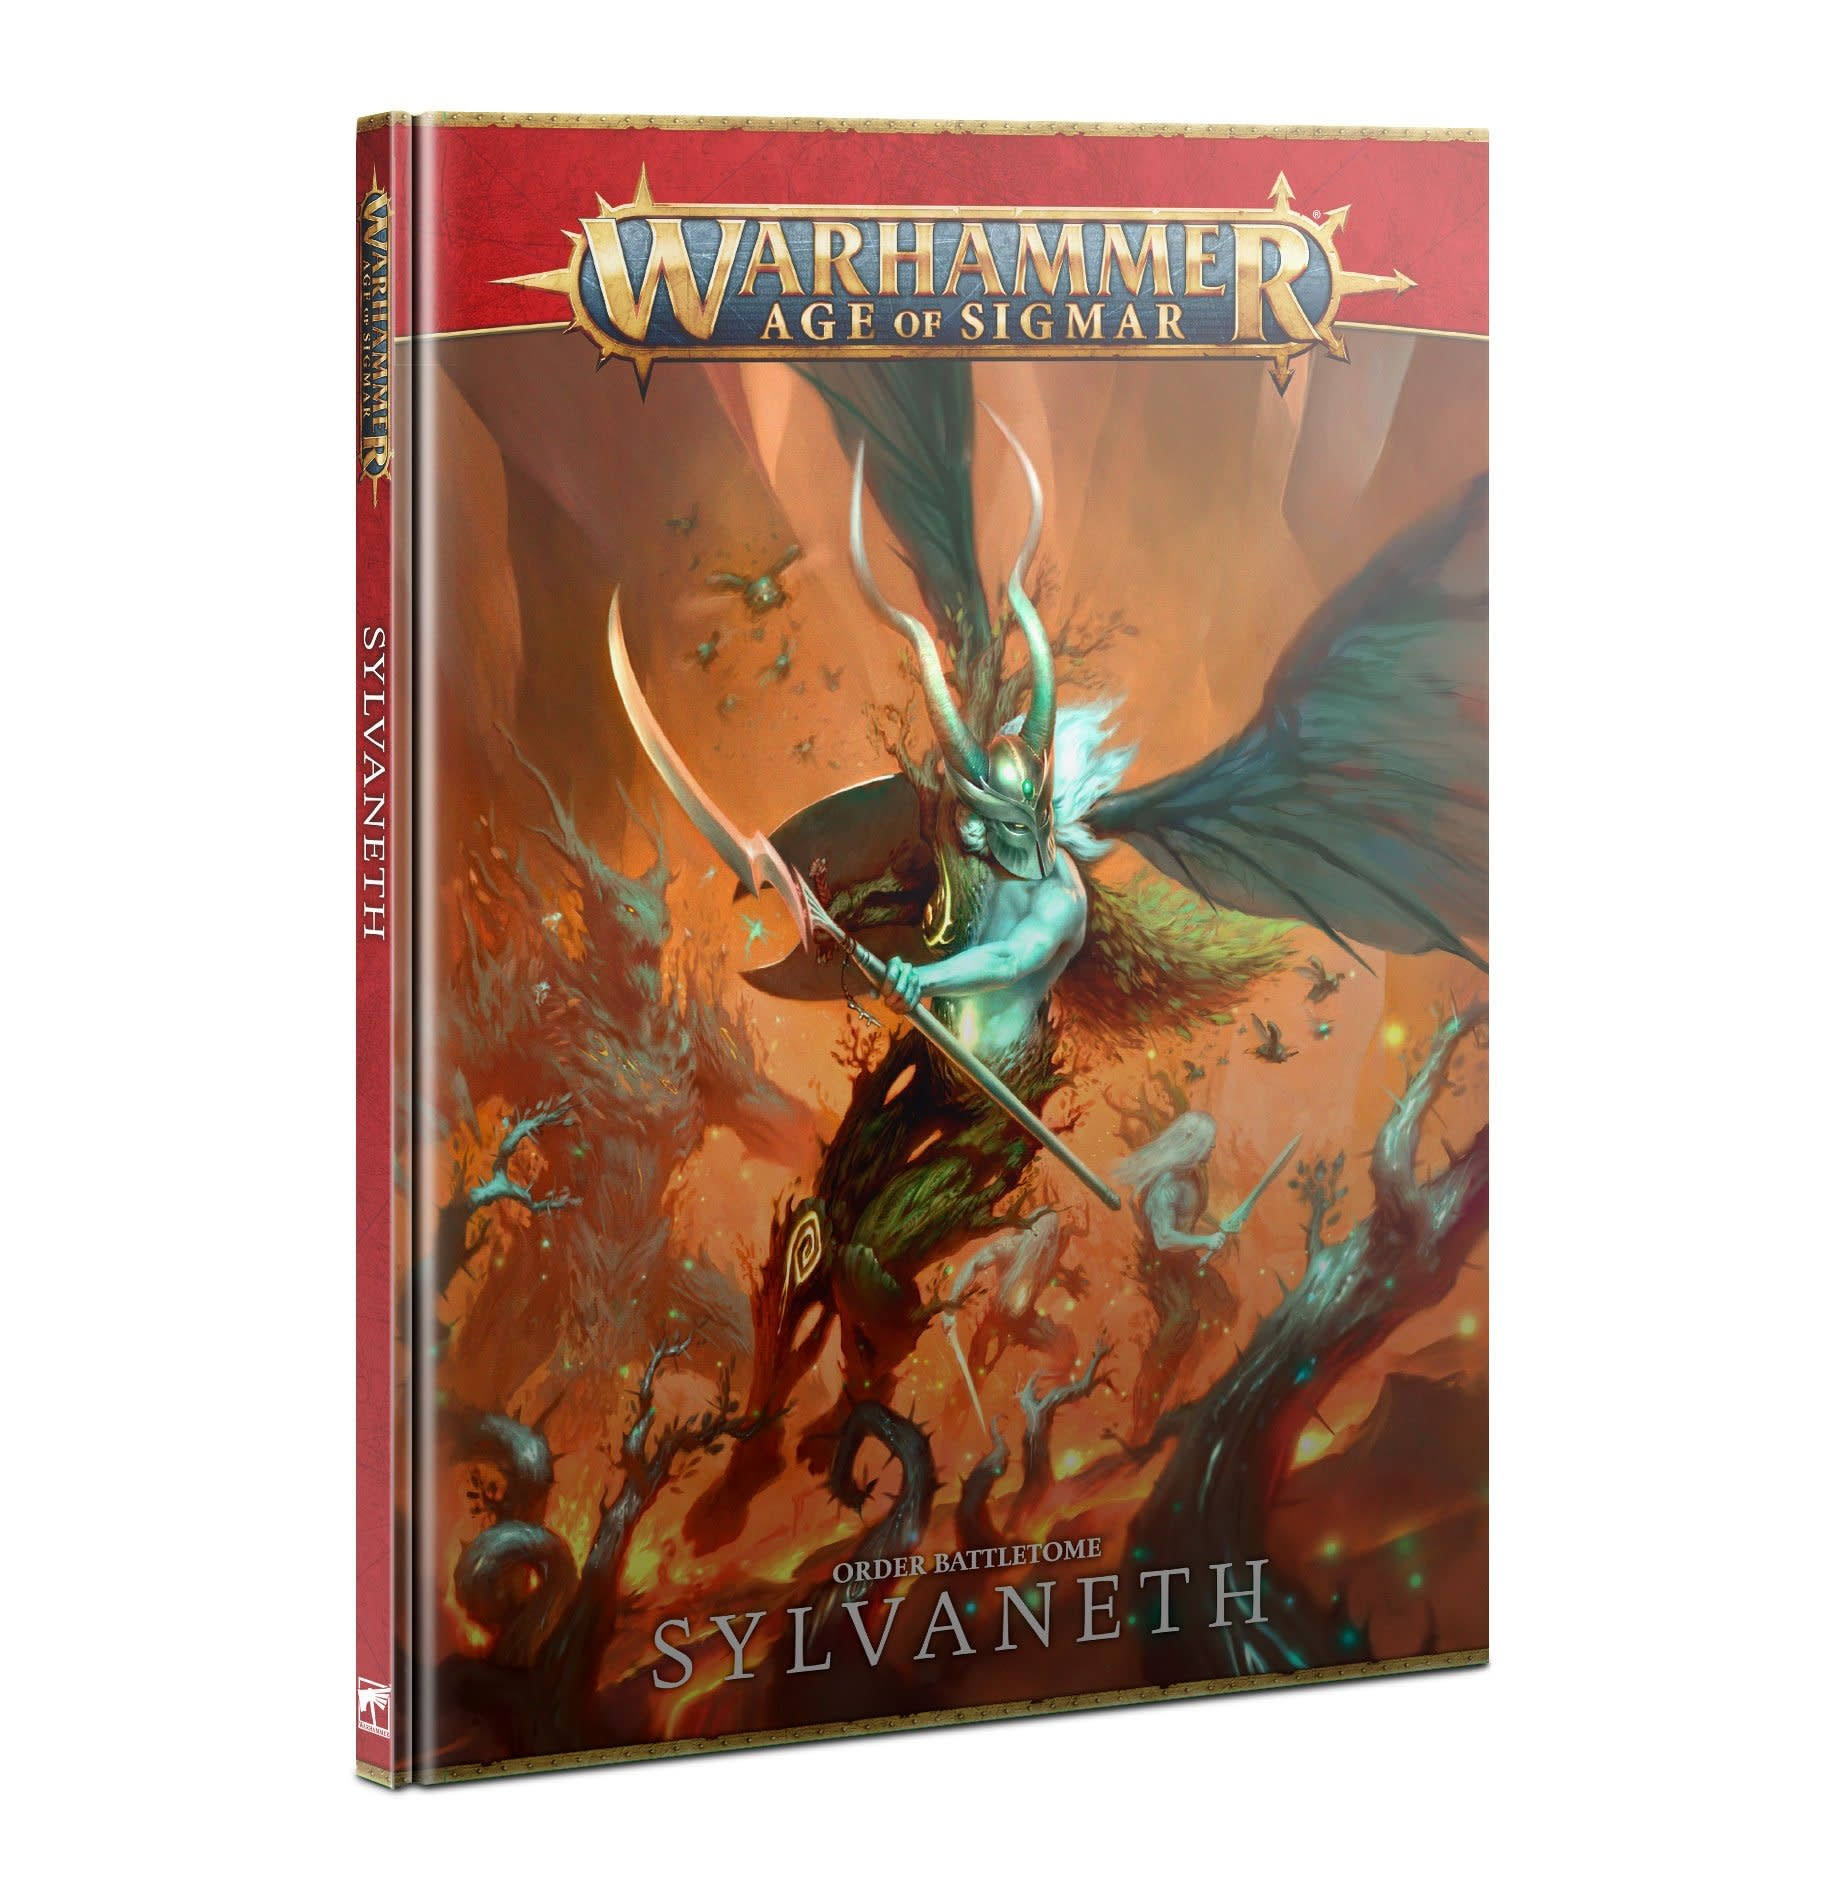 Battletome - Sylvaneth (Warhammer Age of Sigmar)